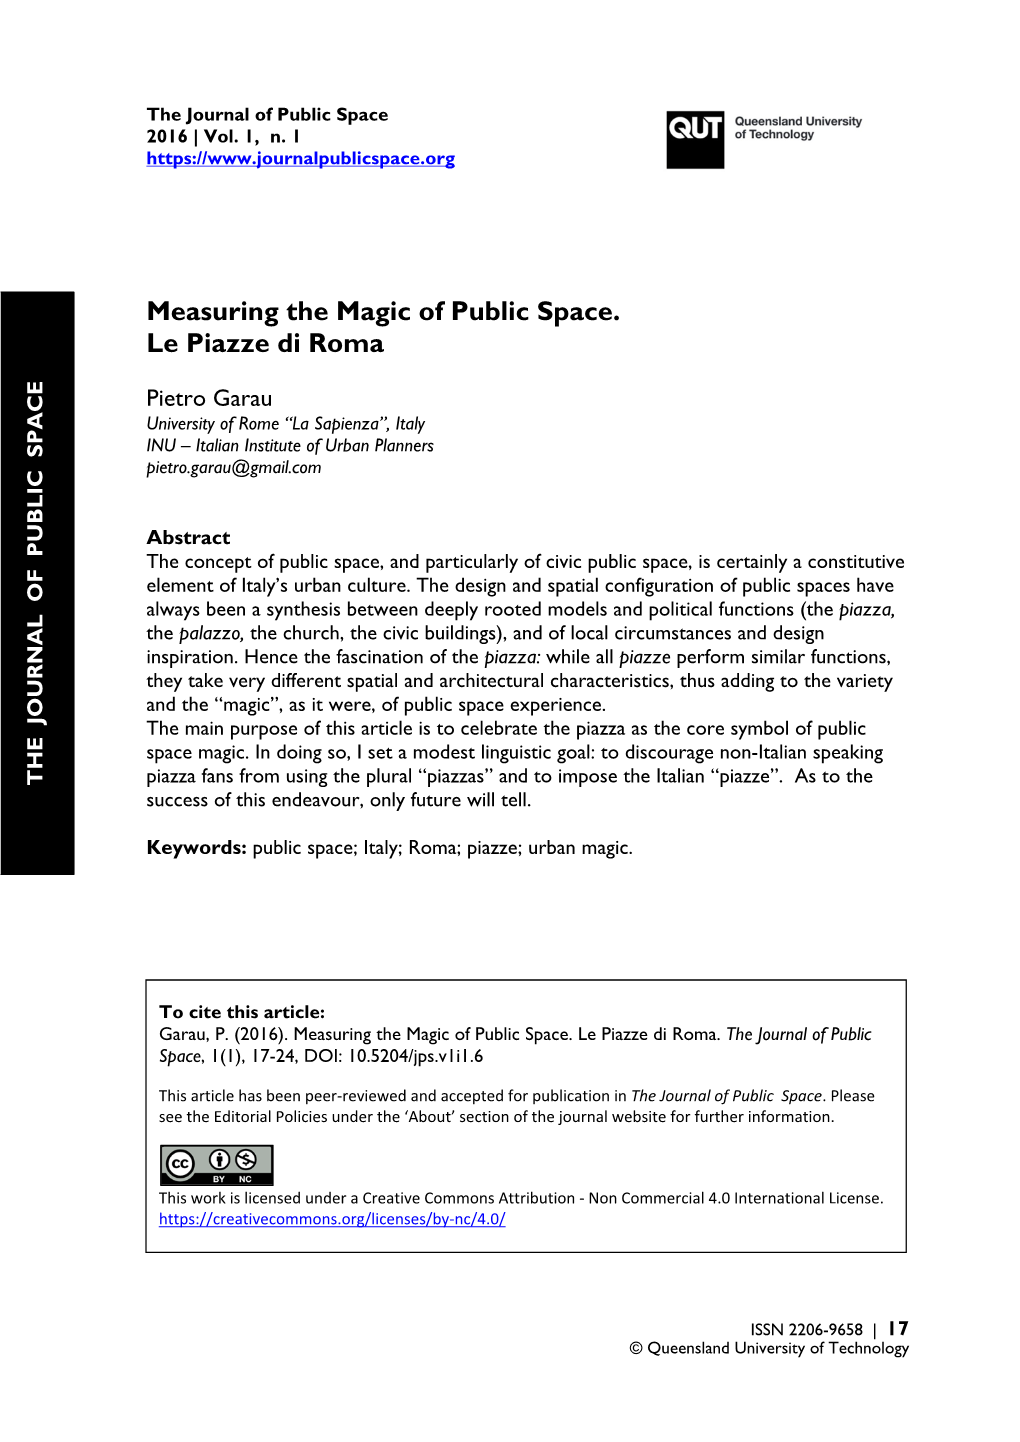 Measuring the Magic of Public Space. Le Piazze Di Roma